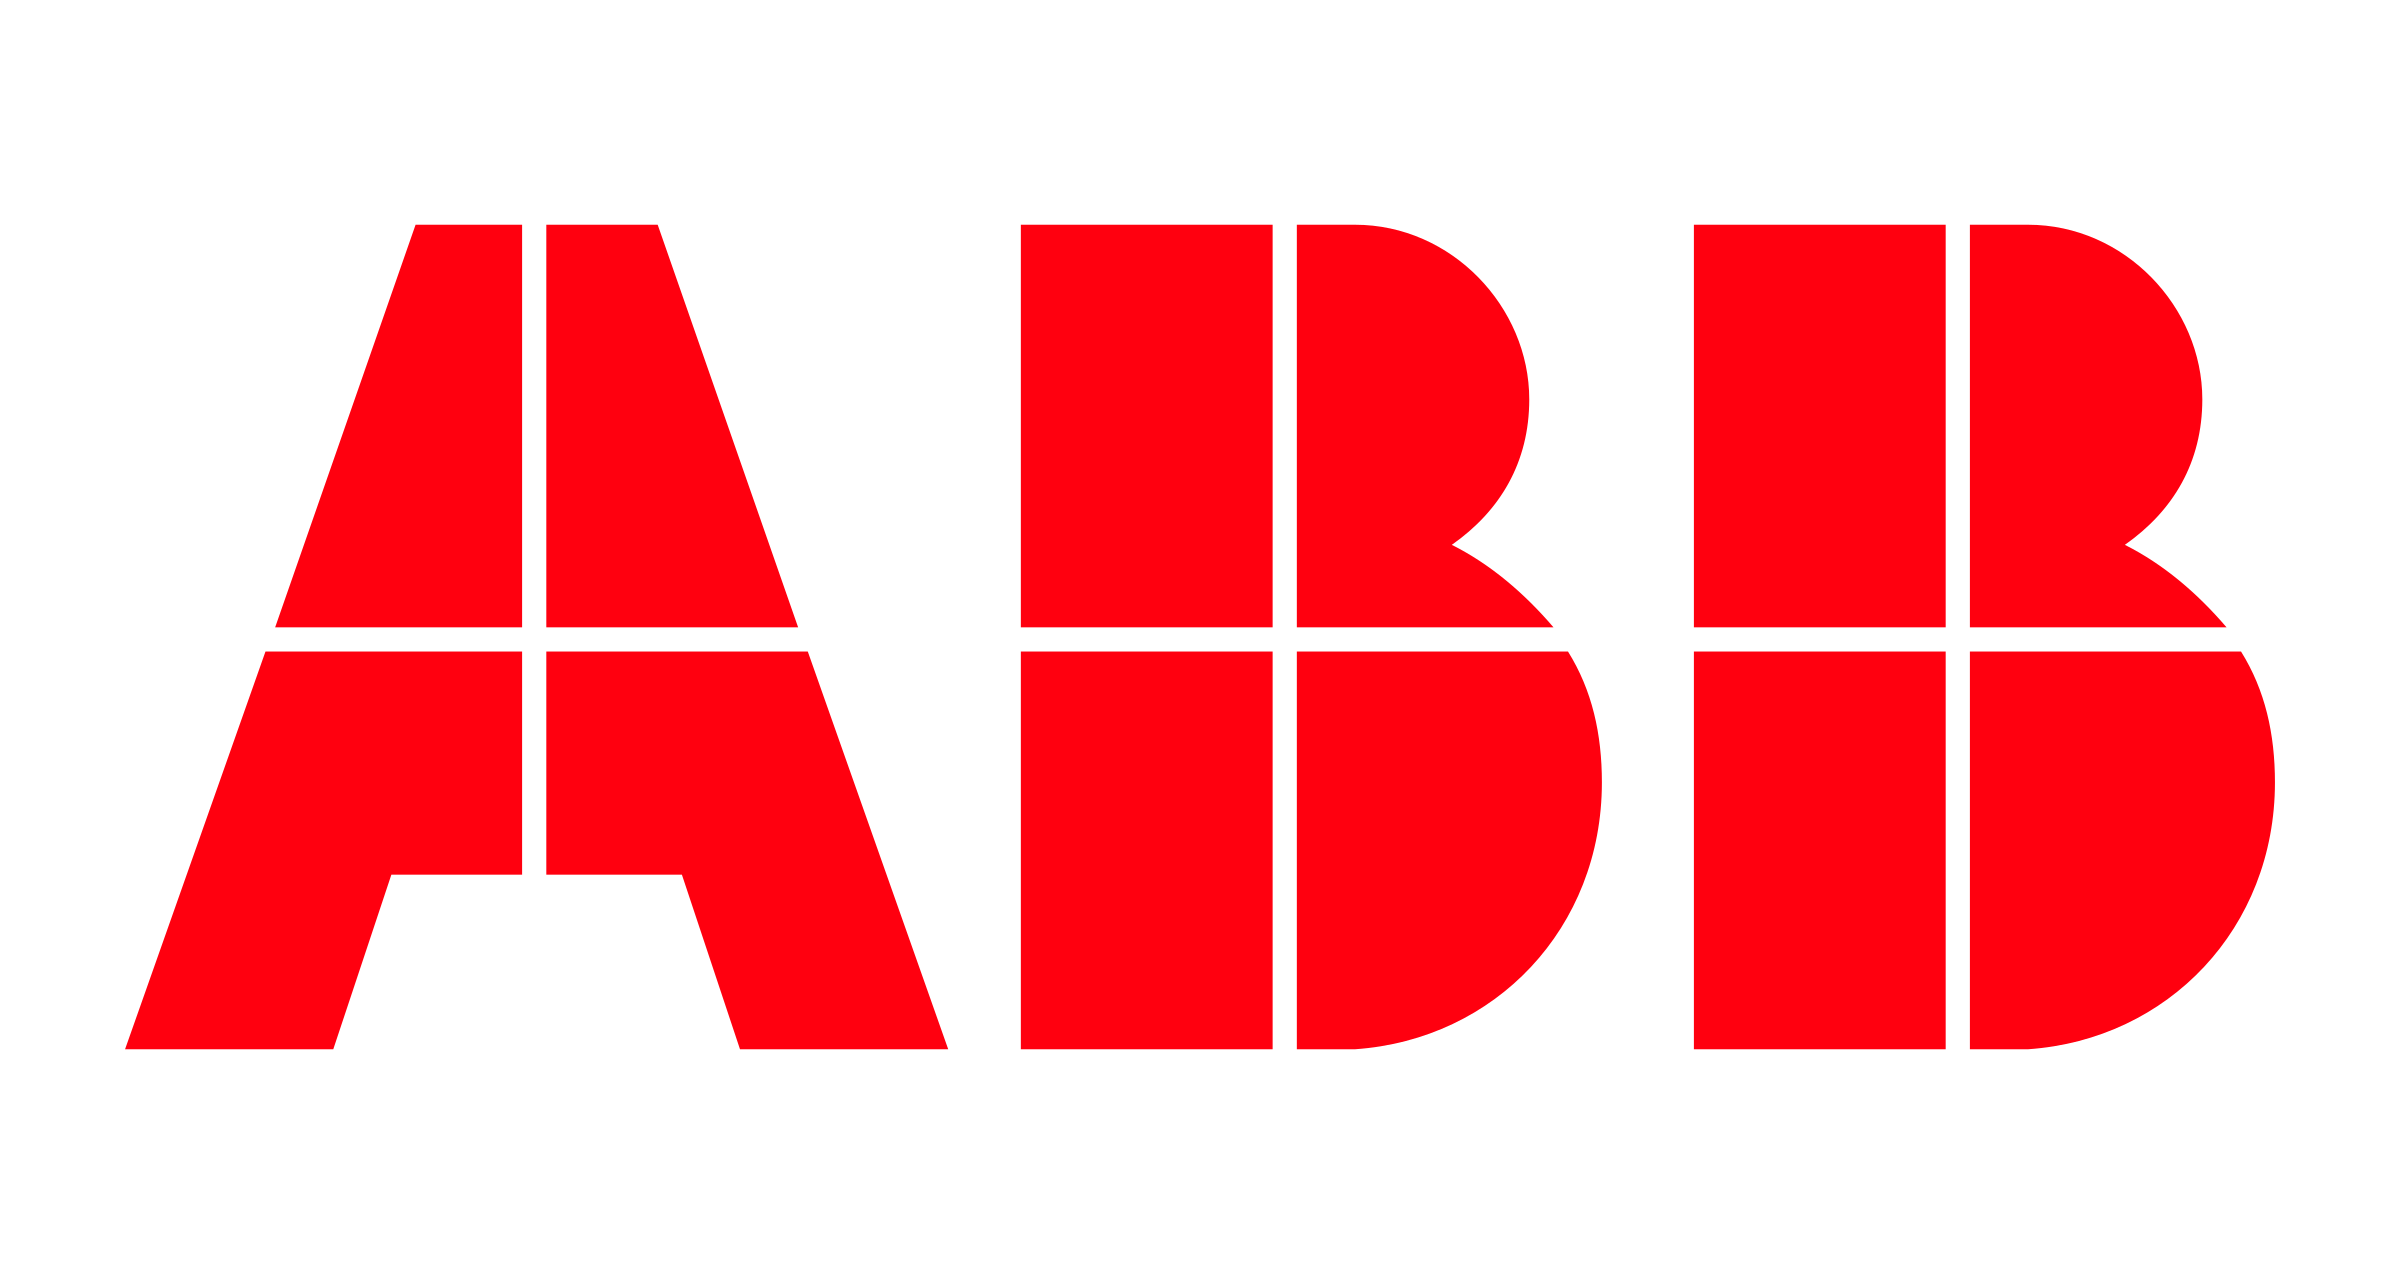 abb-logo-png-transparent-1.png